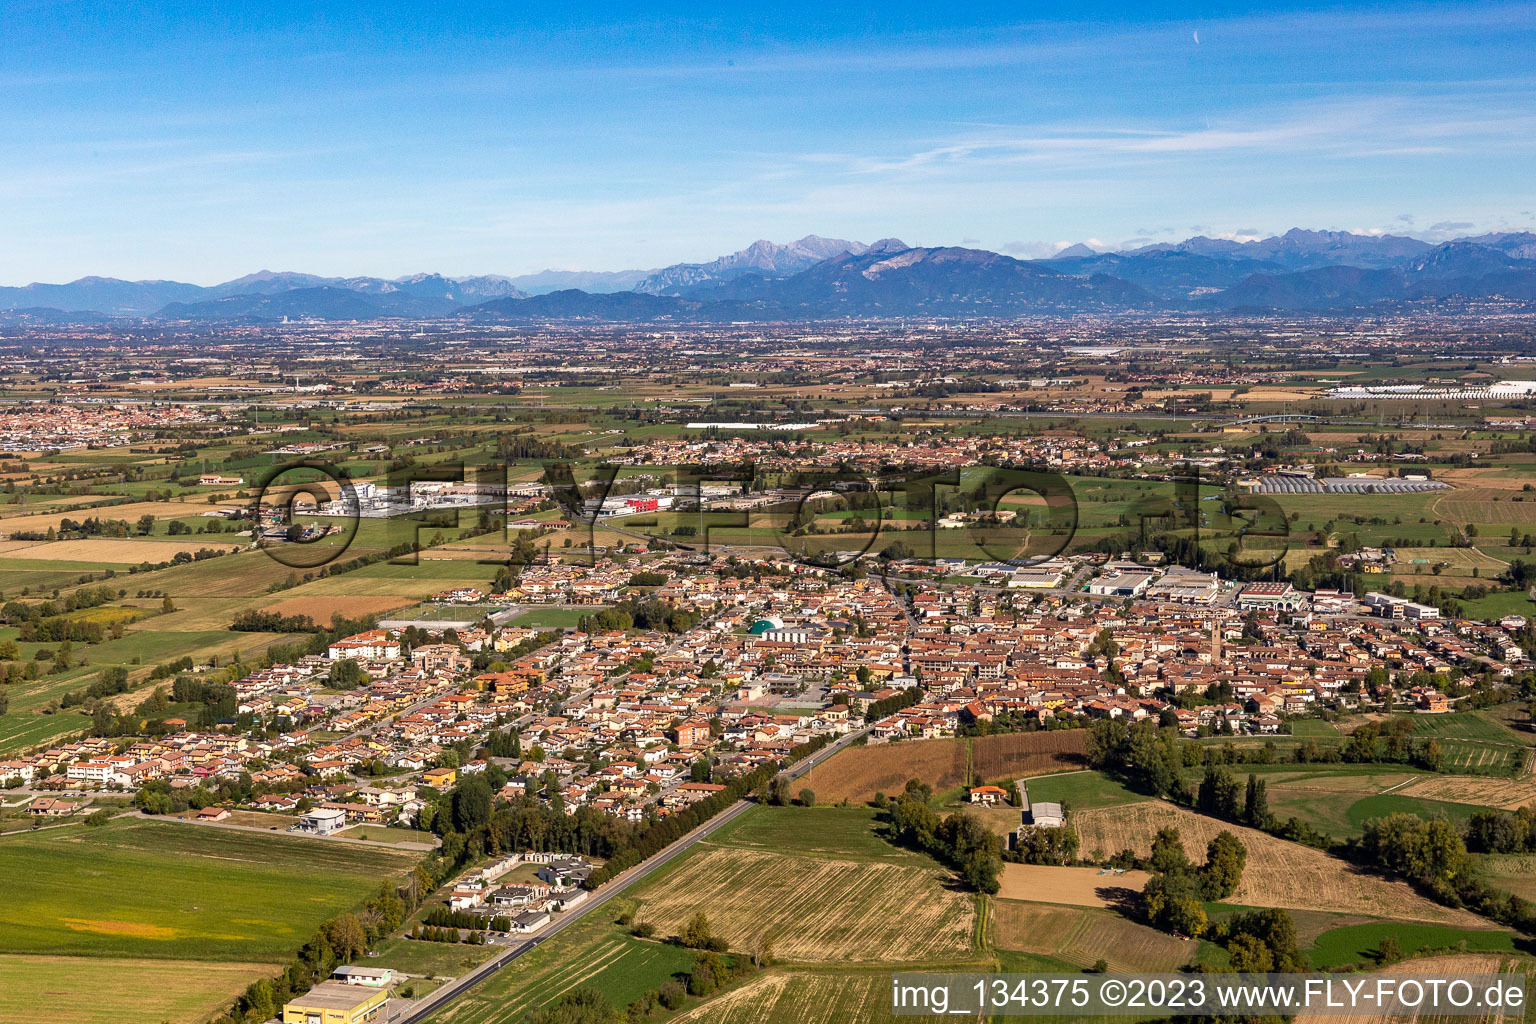 Luftbild von Mozzanica im Bundesland Bergamo, Italien